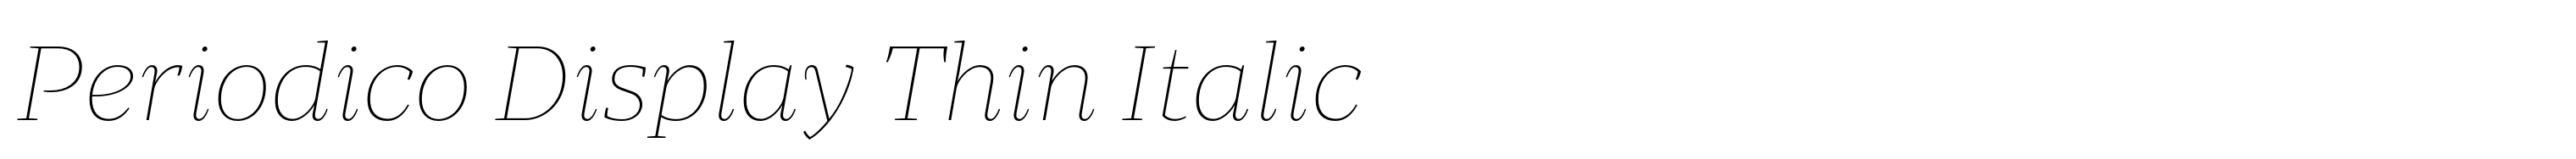 Periodico Display Thin Italic